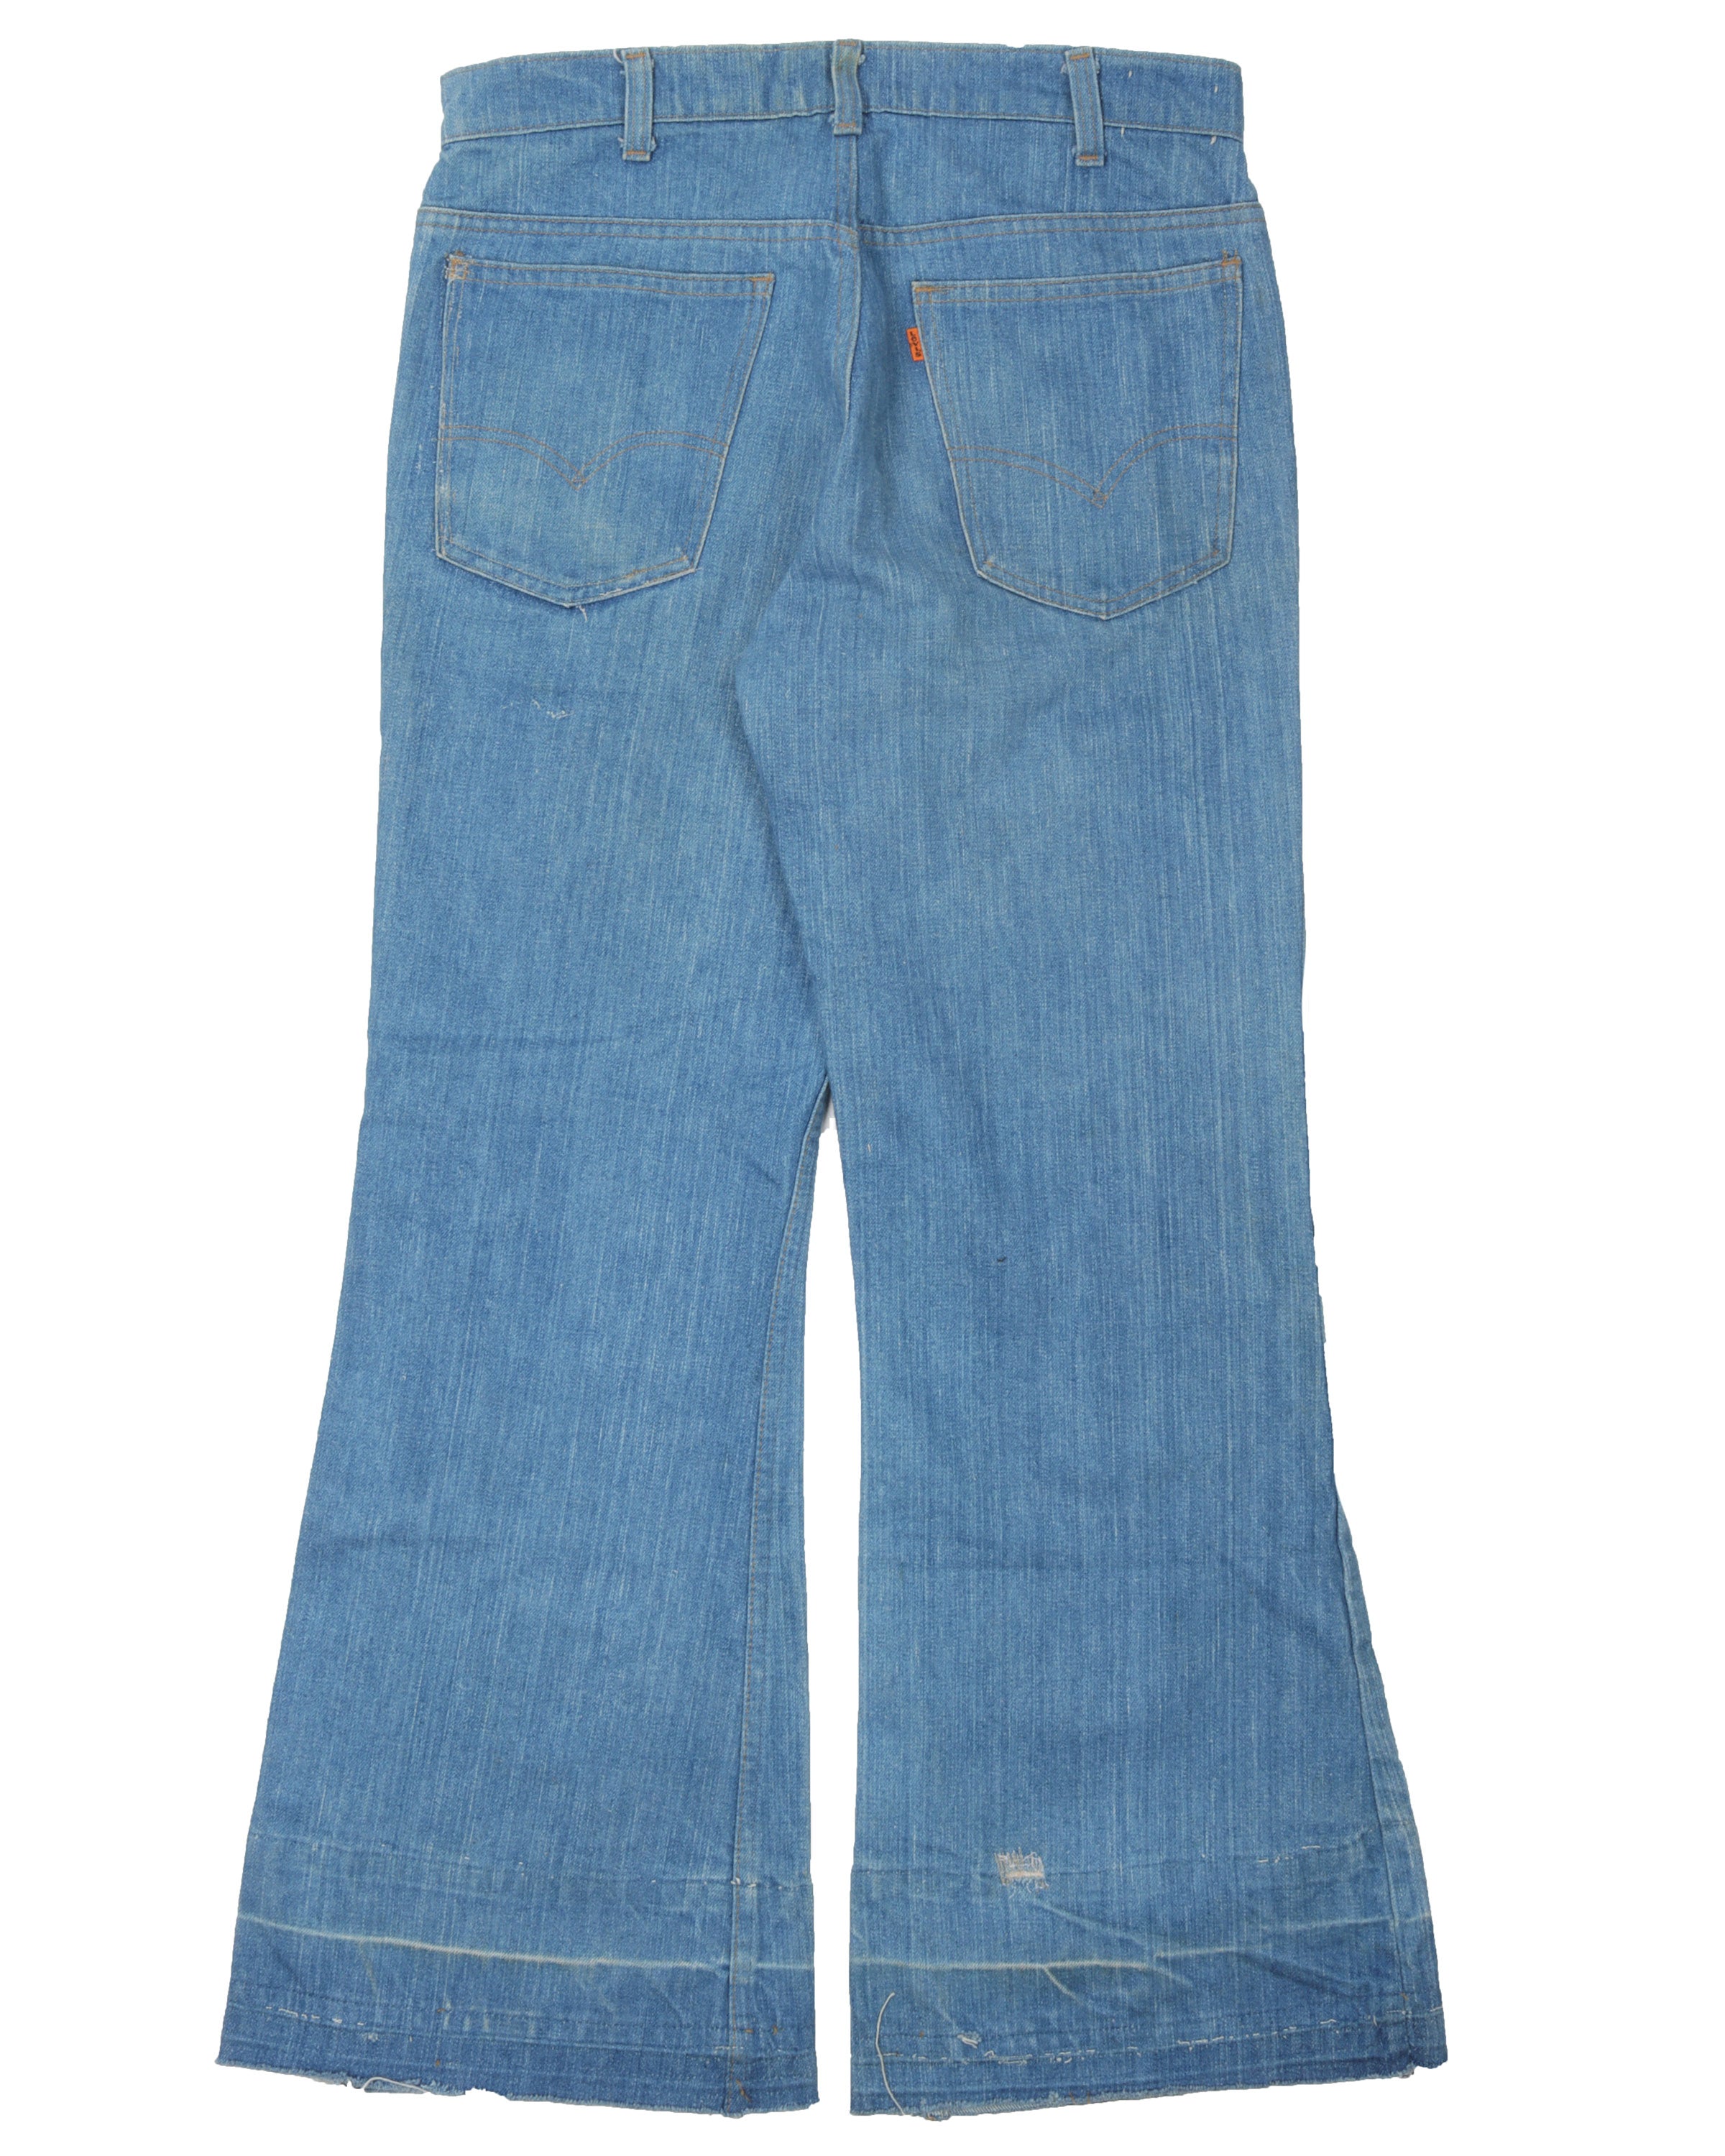 Levi's Orange Tab Repaired Bellbottom Jeans